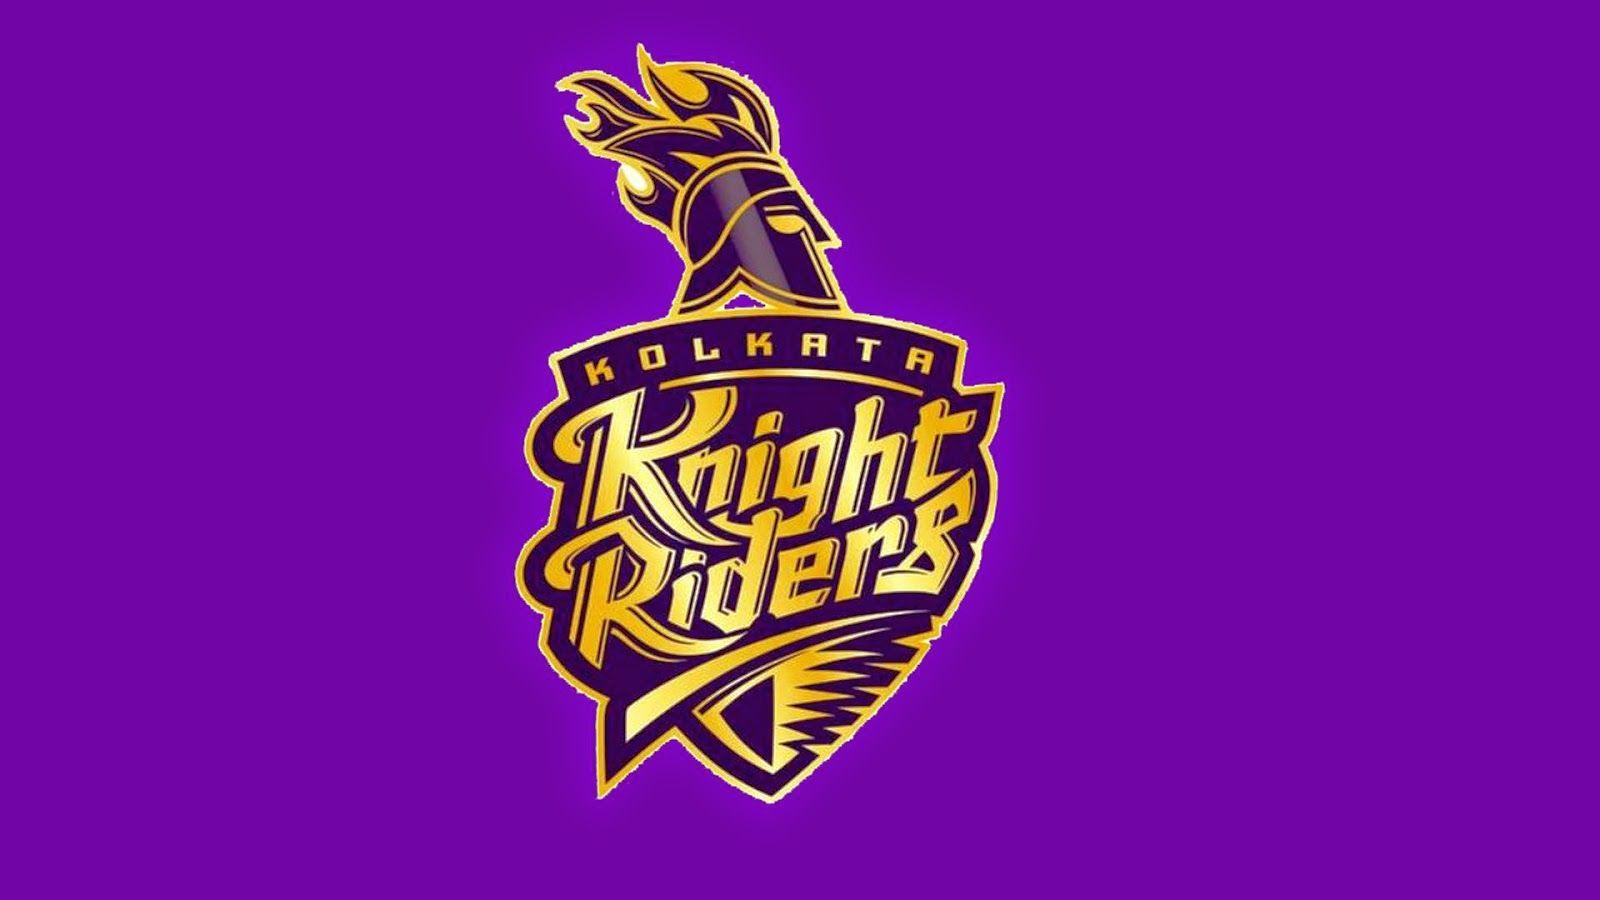 Download IPL Team Wallpaper Logos for Whatsapp DP, Facebook and. Kolkata knight riders, Knight rider, Rider